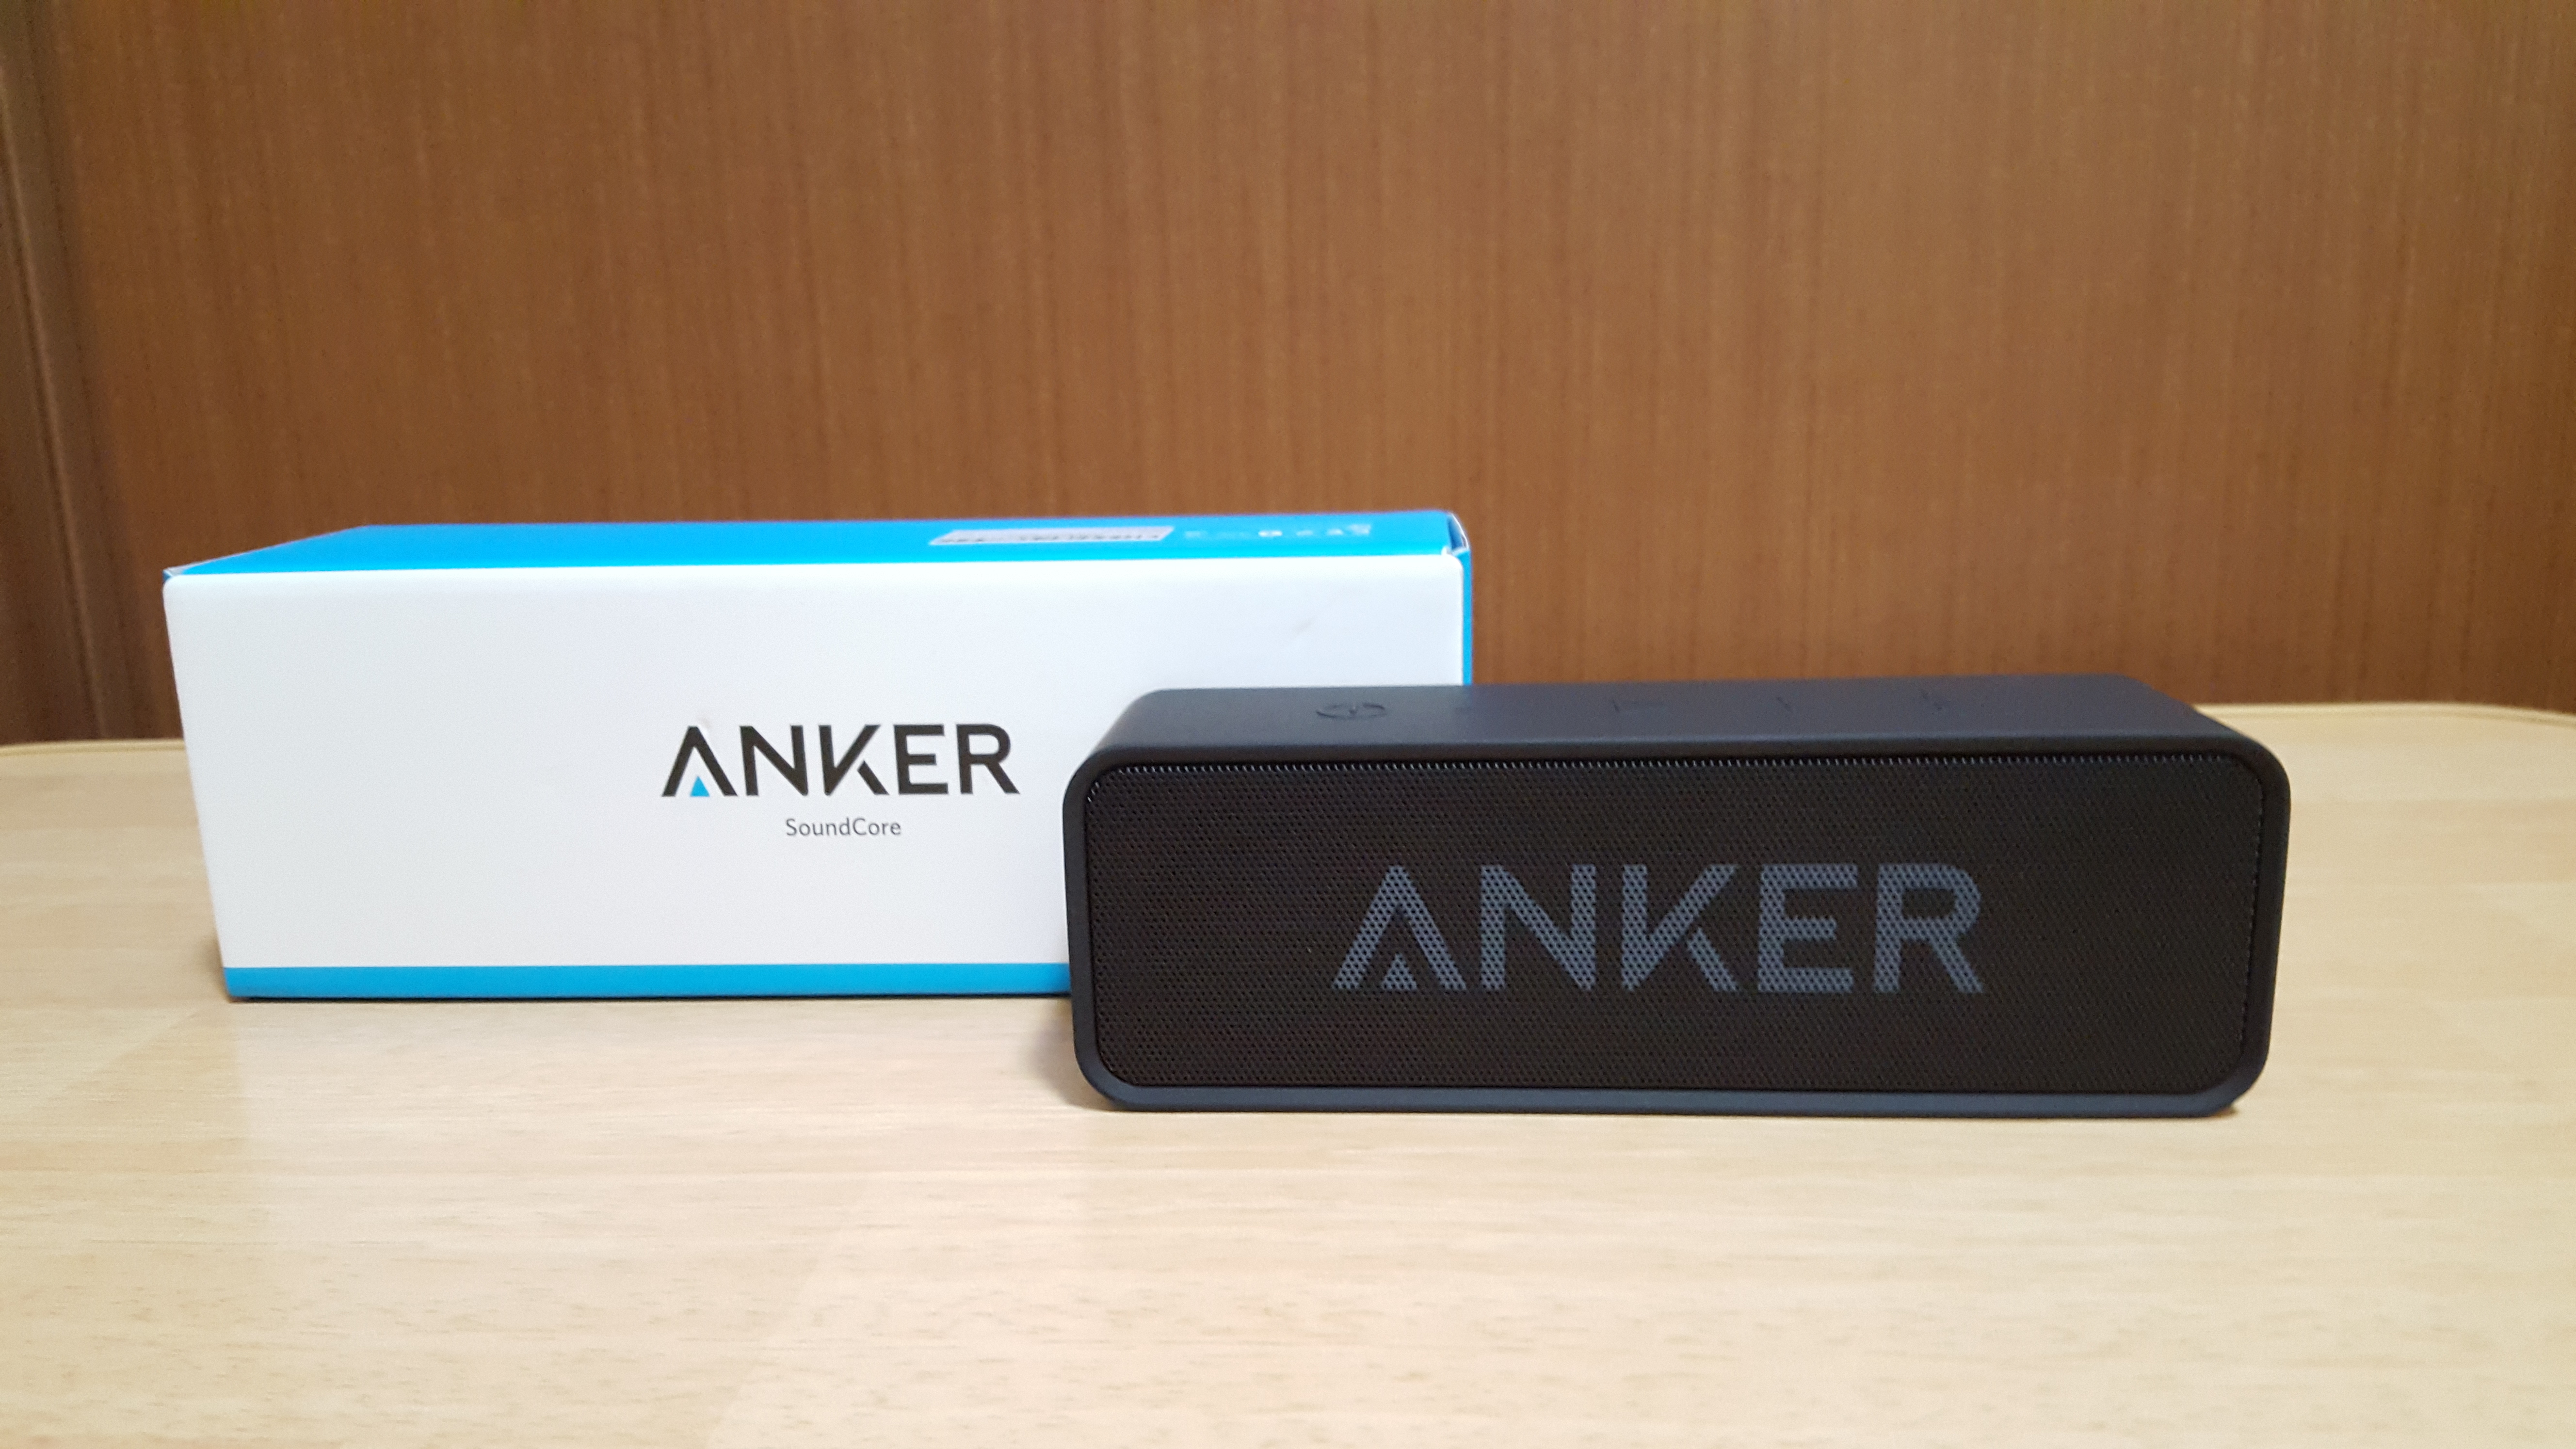 「Anker SoundCore Bluetooth スピーカー」レビュー。コスパが高く、プレゼントにも最適。